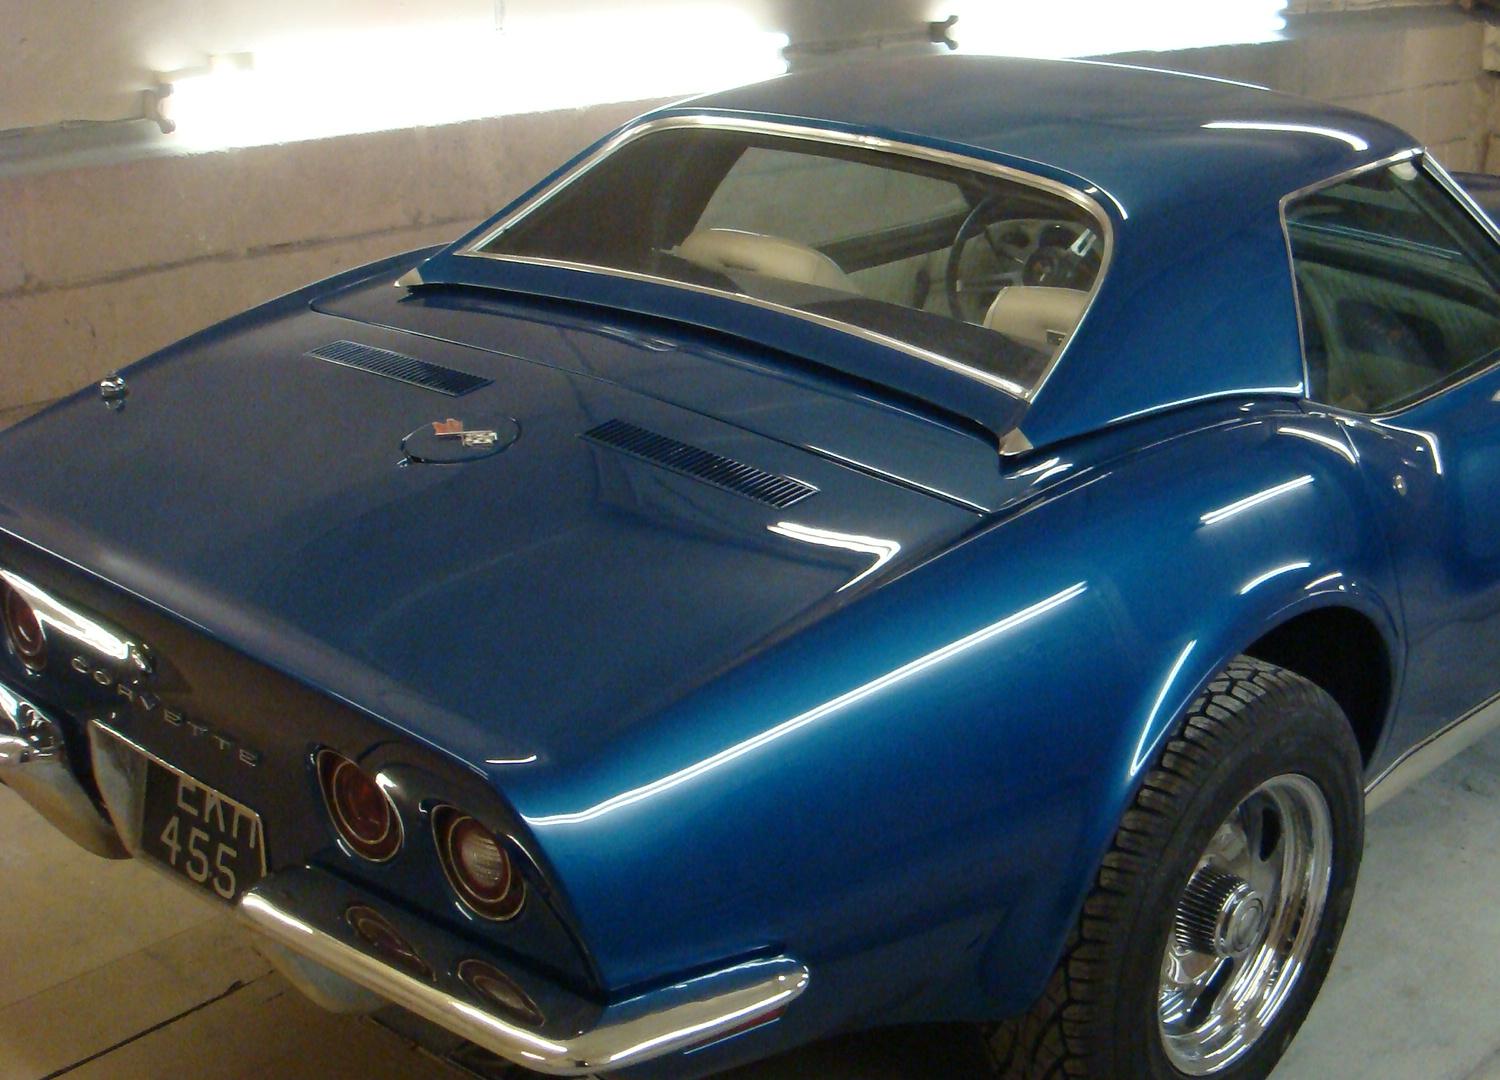 1970 Corvette Stingray | 1970 Corvette | Corvette Stingray | Classic american cars | Classic car restoration | Corvette restoration | APR Bodyworks